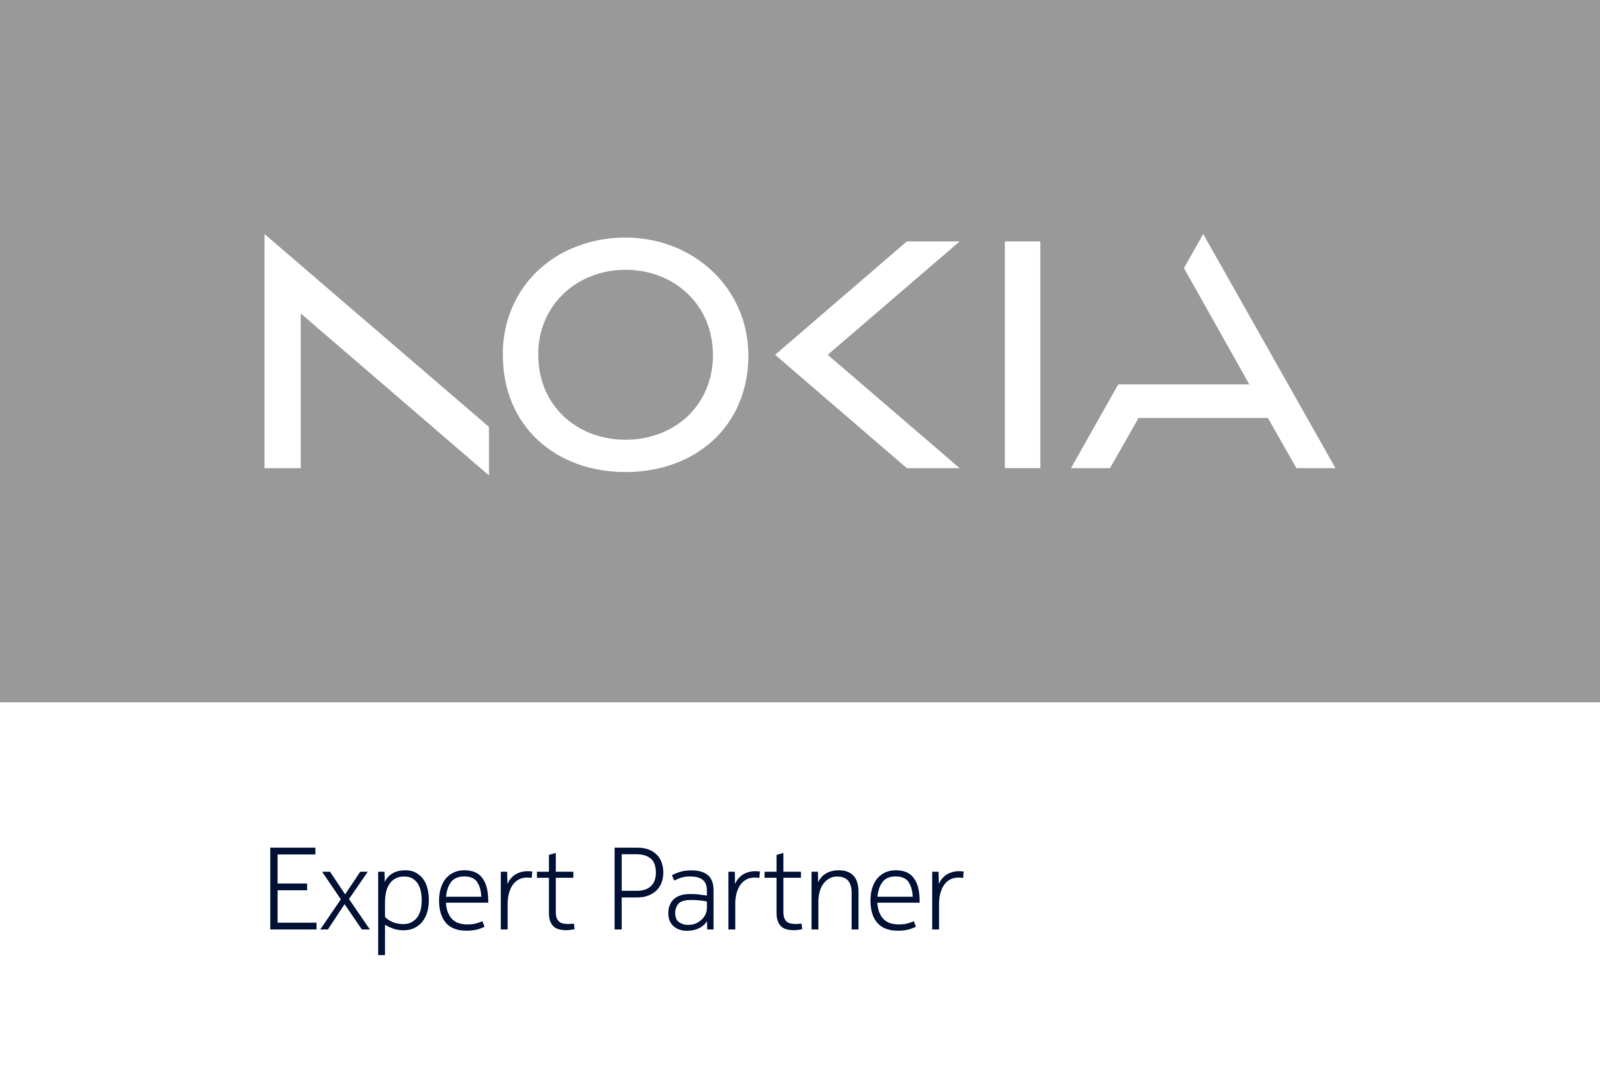 Expert Partner logo - 3840x2560 - Grey 700